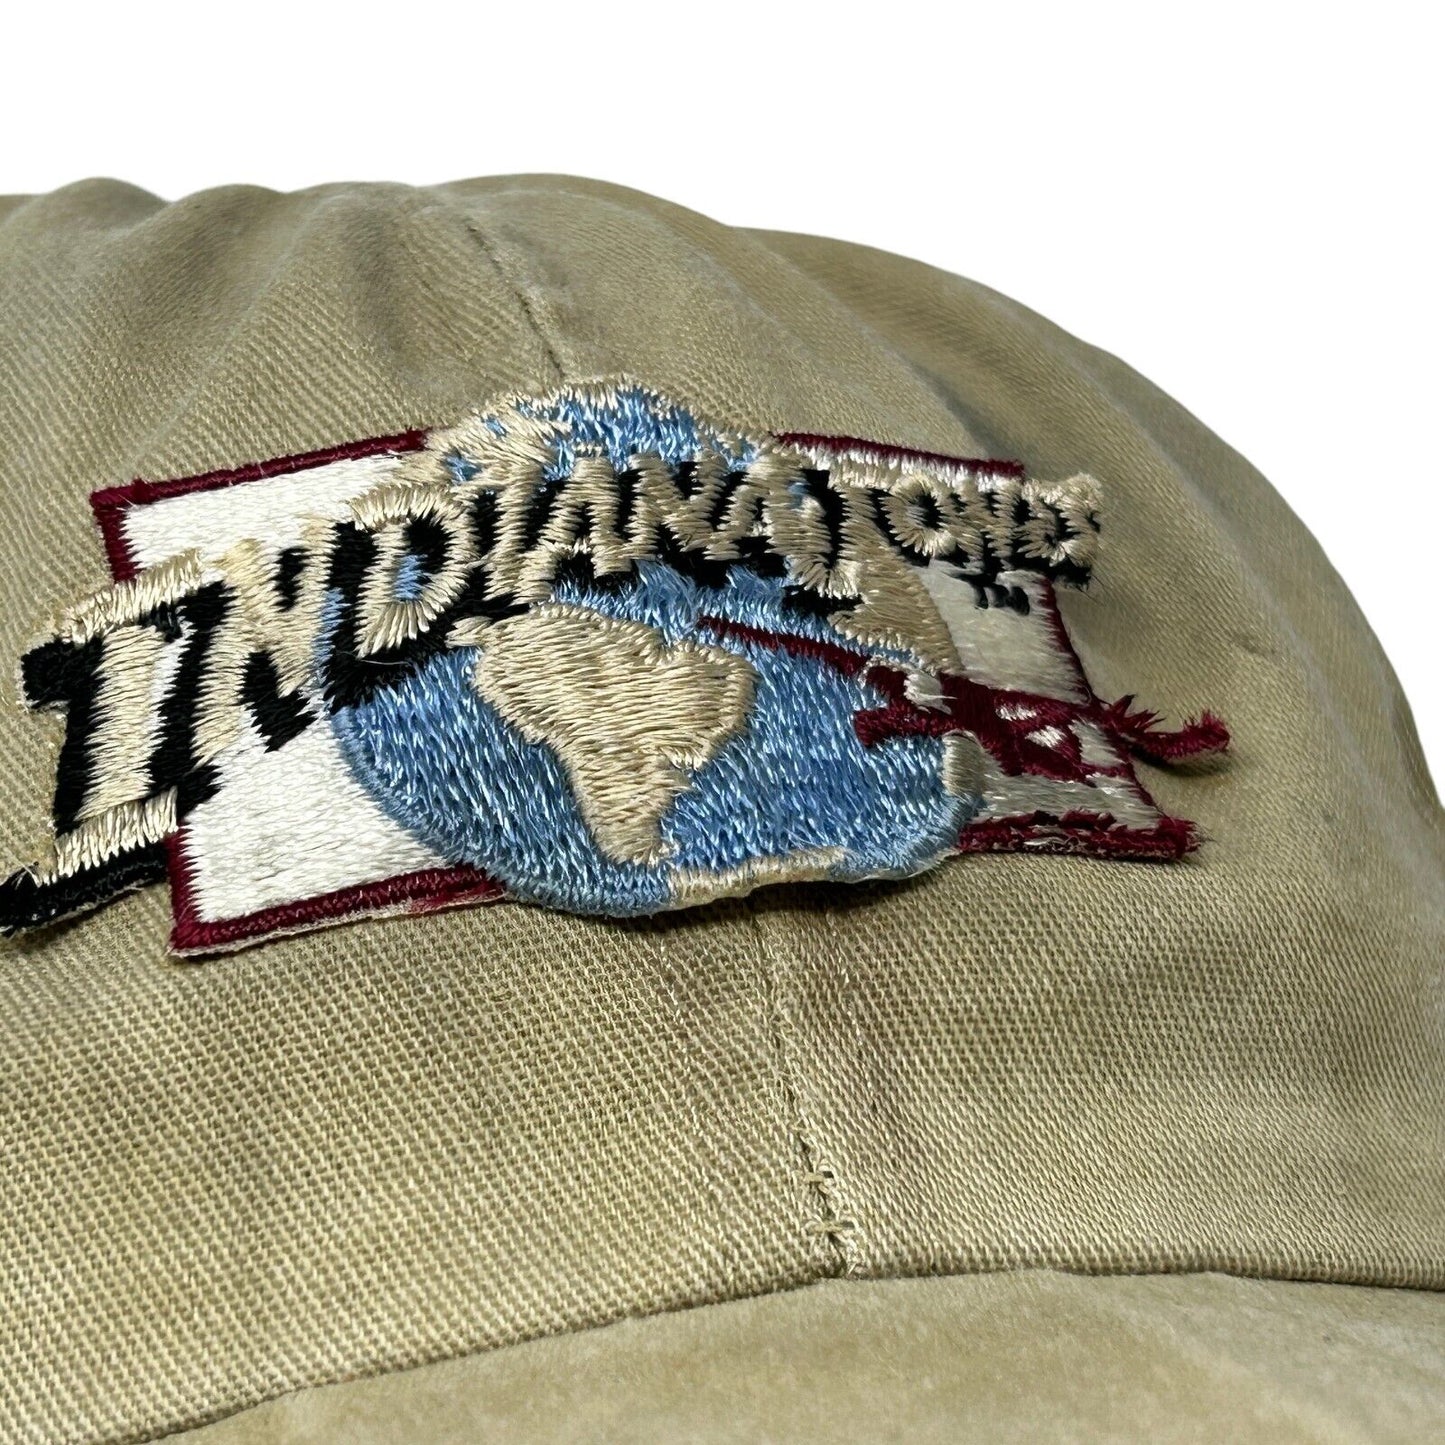 Indiana Jones Vintage 80s Hat Movie Film Beige Six Panel Snapback Baseball Cap